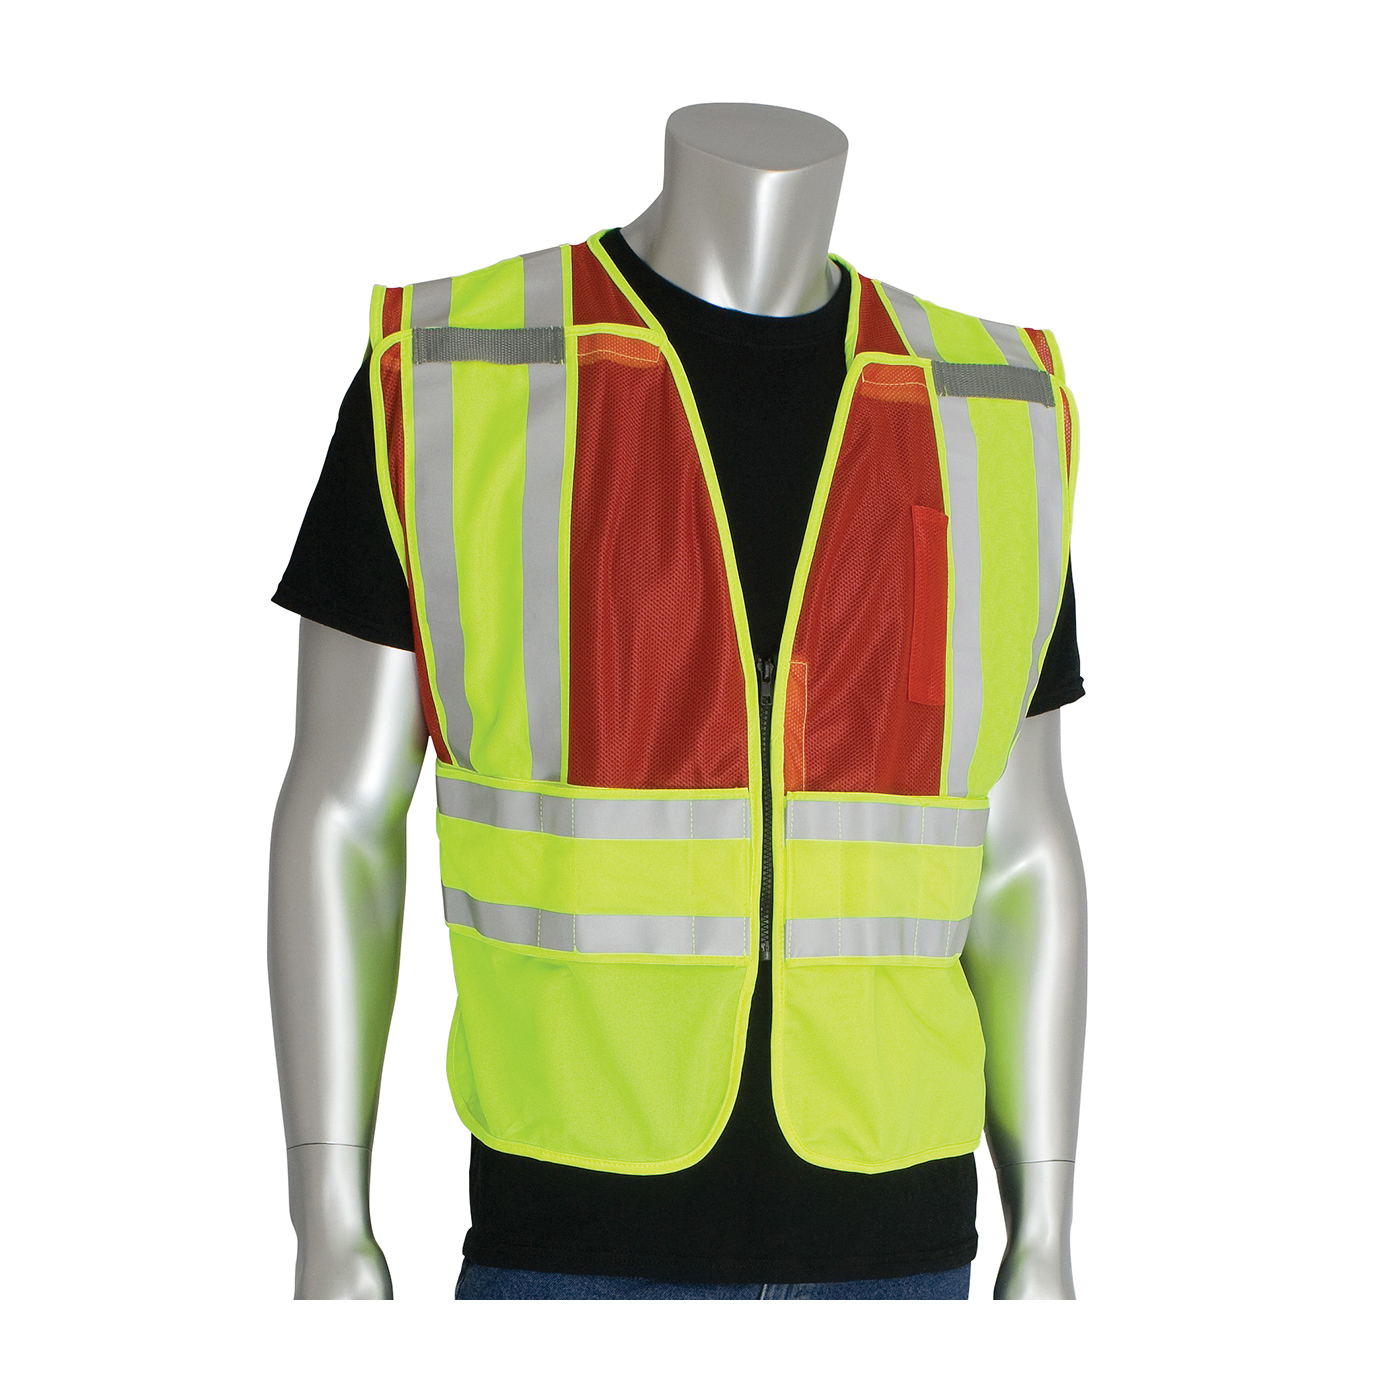 PIP® SafetyGear 302-PSV-RED-NL-MD/XL Public Safety Vest, M/XL, Red/Hi-Viz Lime Yellow, Polyester, Front Zipper Closure, 2 Pockets, ANSI Class: Class 2, ANSI 207-2011 Type P